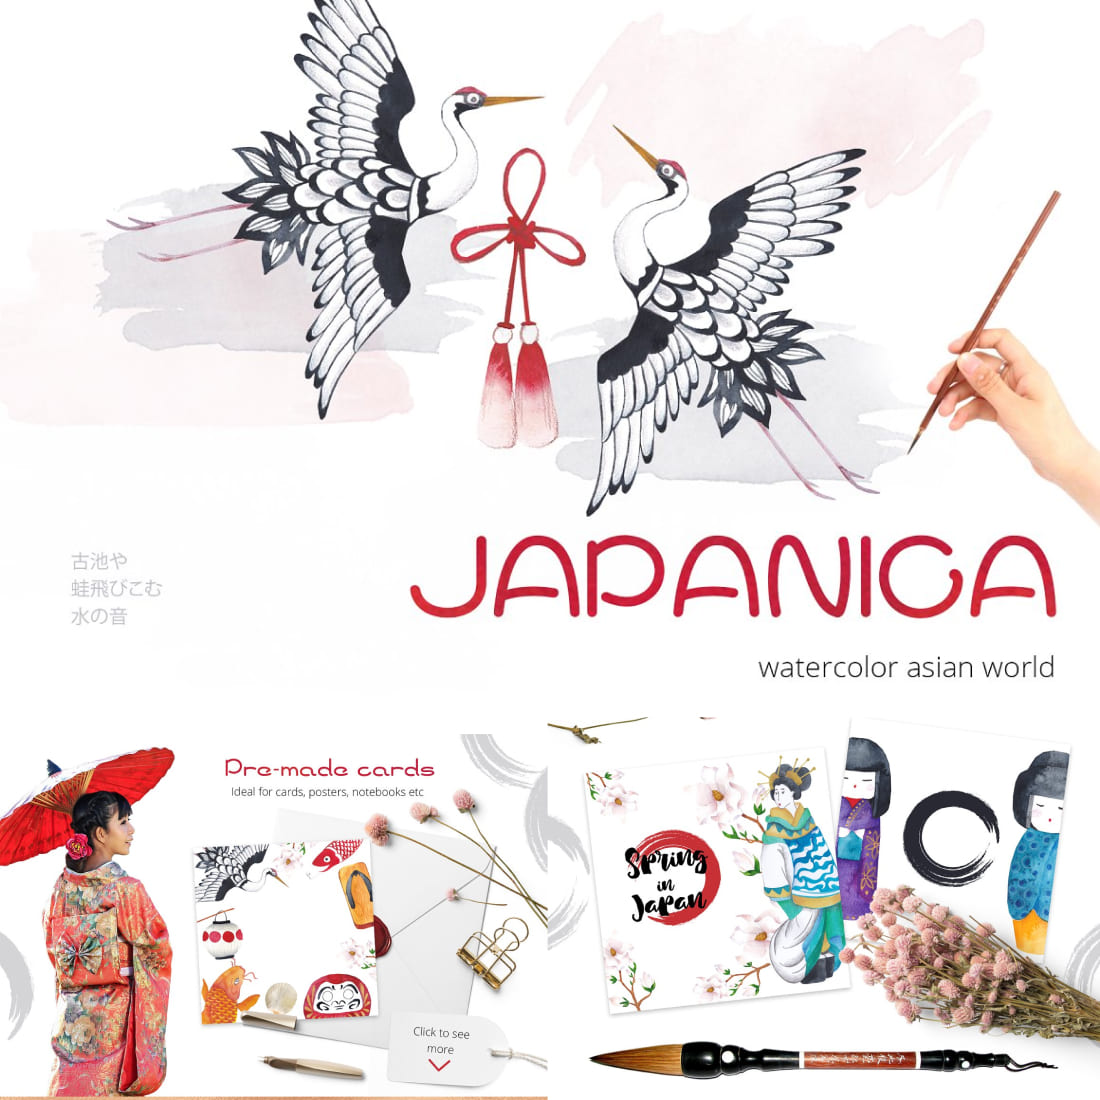 Japan watercolor graphic set - main image preview.